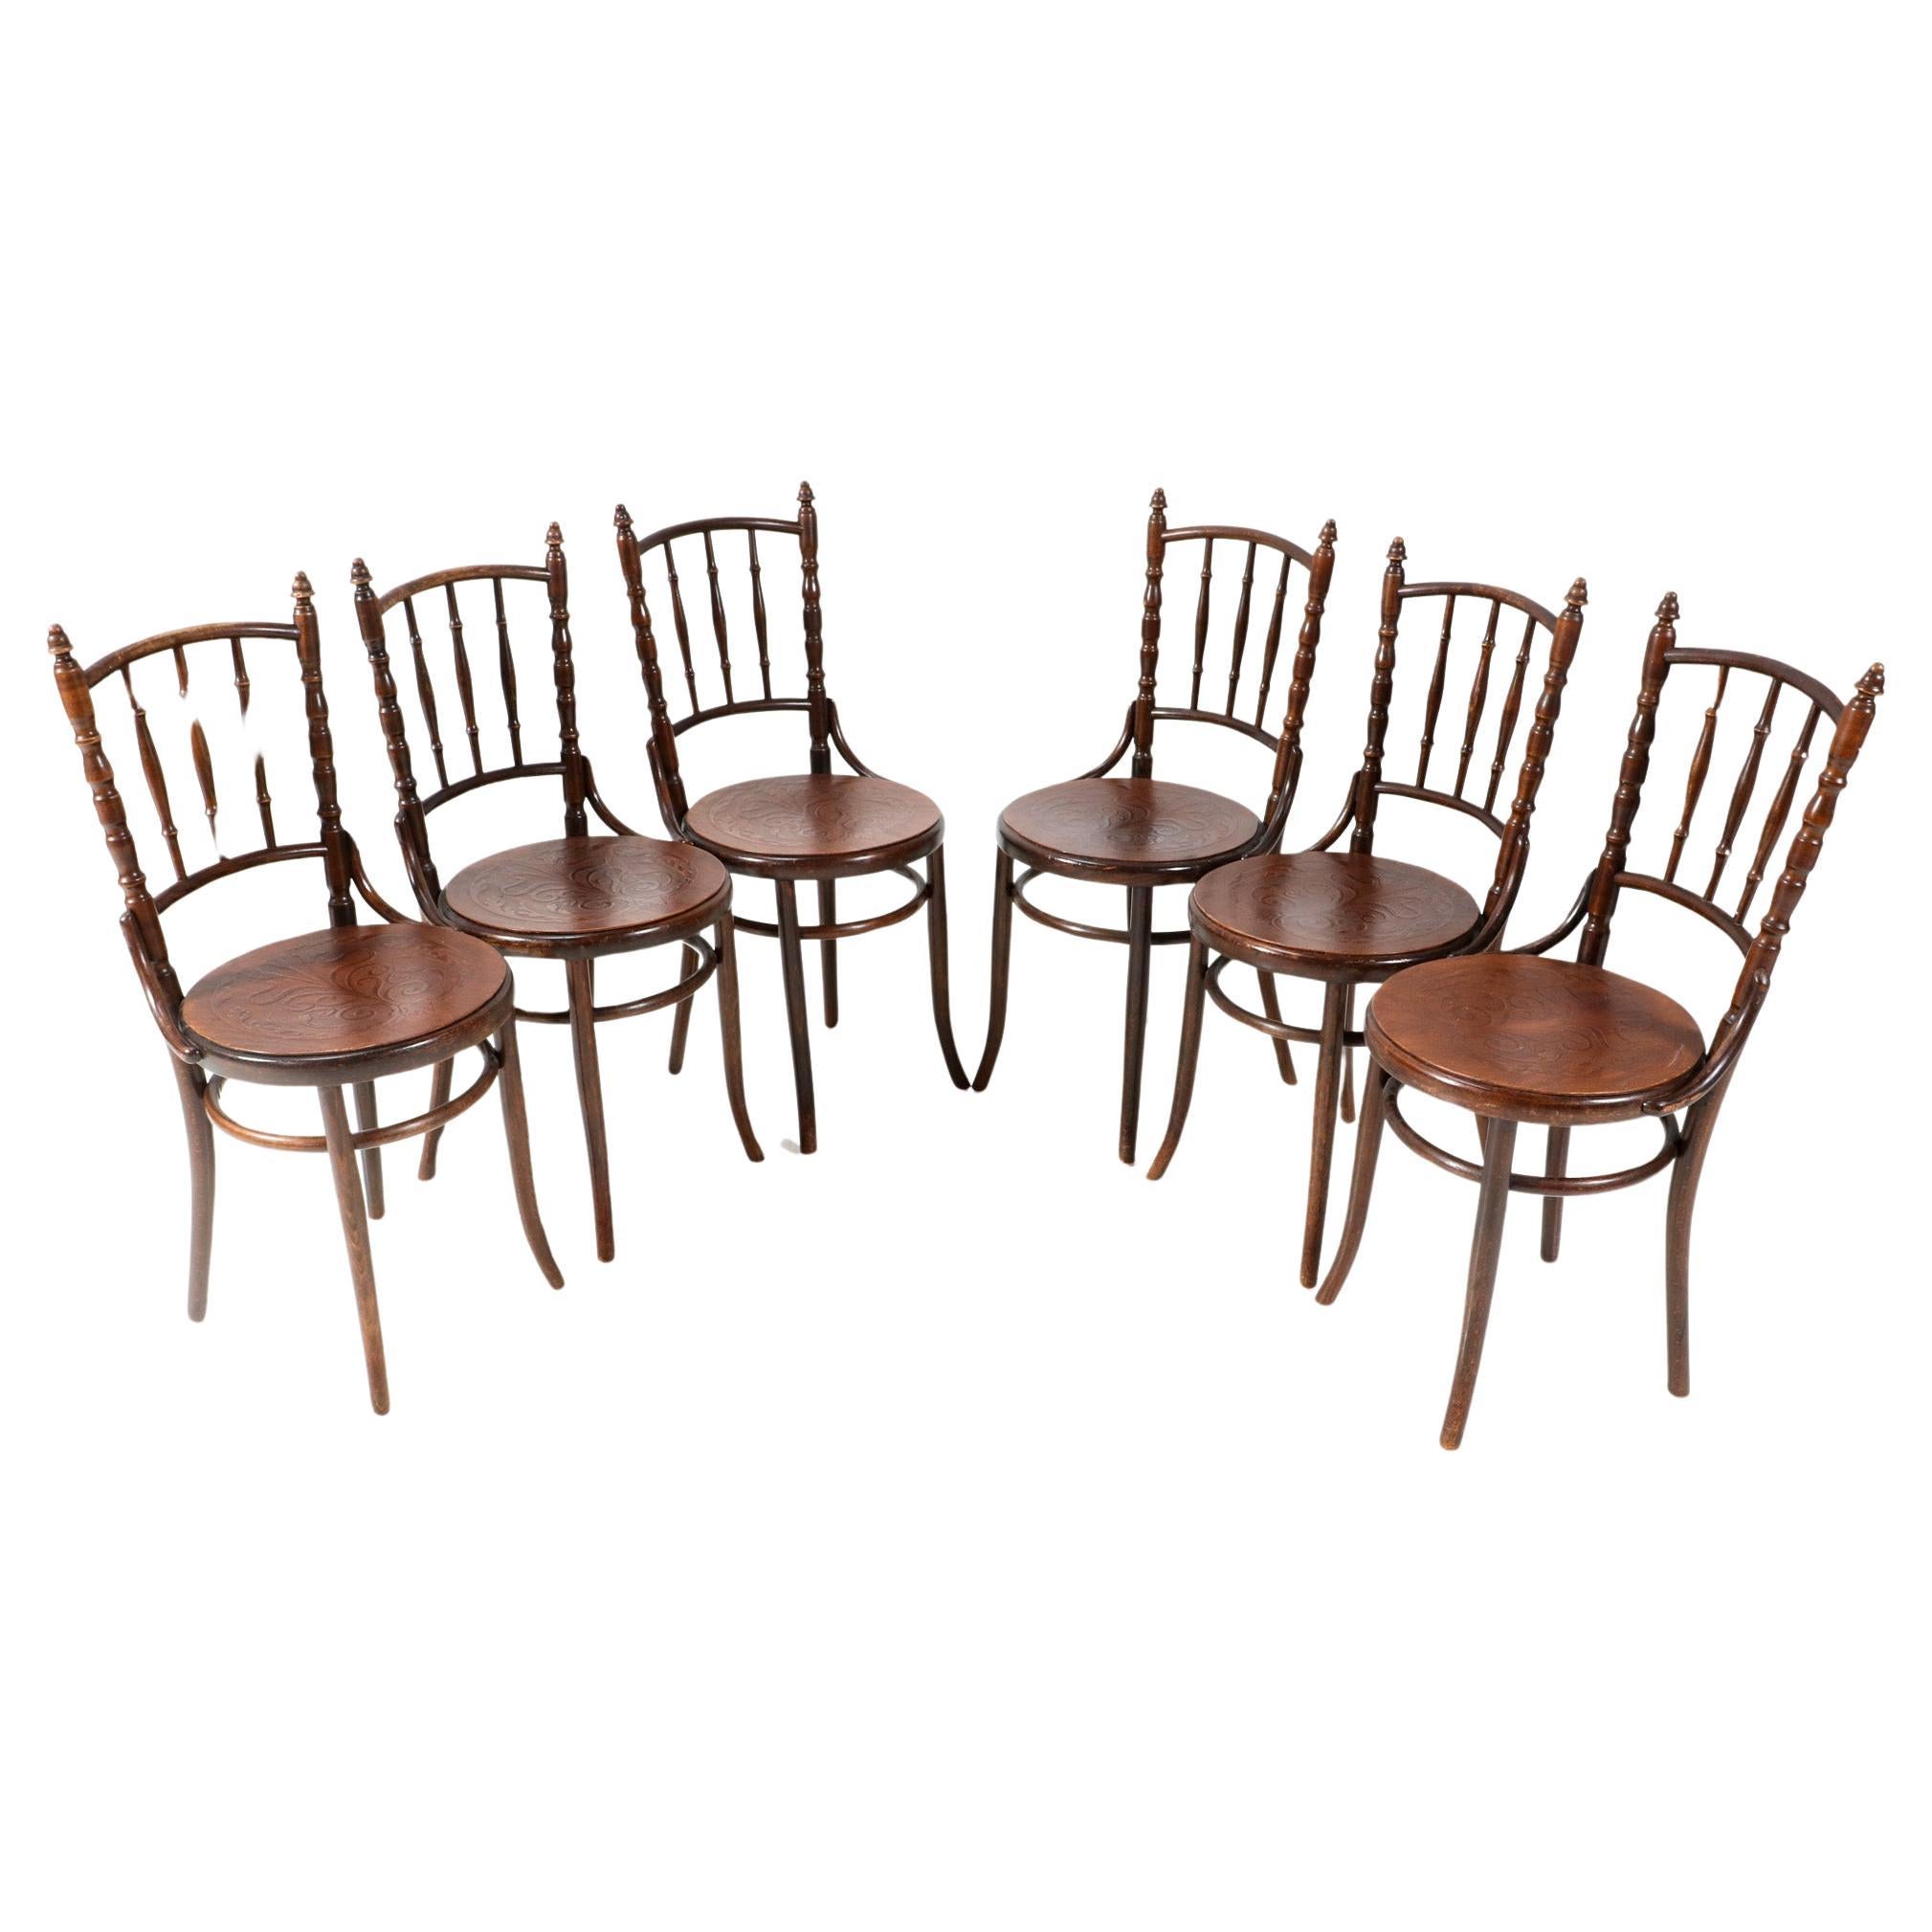 Fischel Chairs